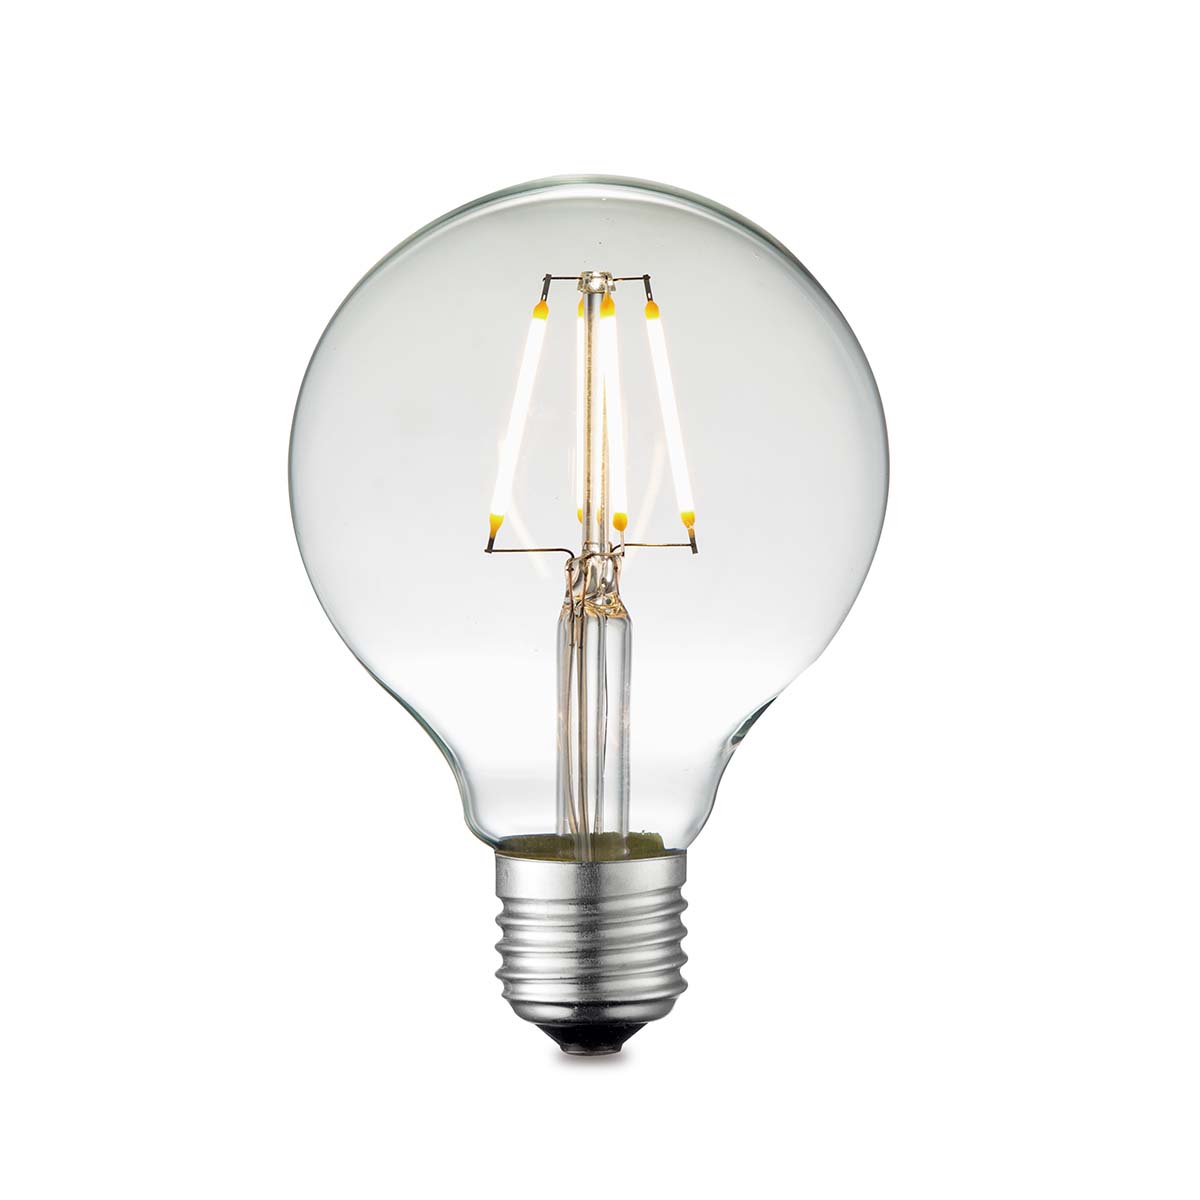 Tangla lighting - TLB-8003-04CL - LED Light Bulb Deco filament - G80 4W clear - dimmable - E27